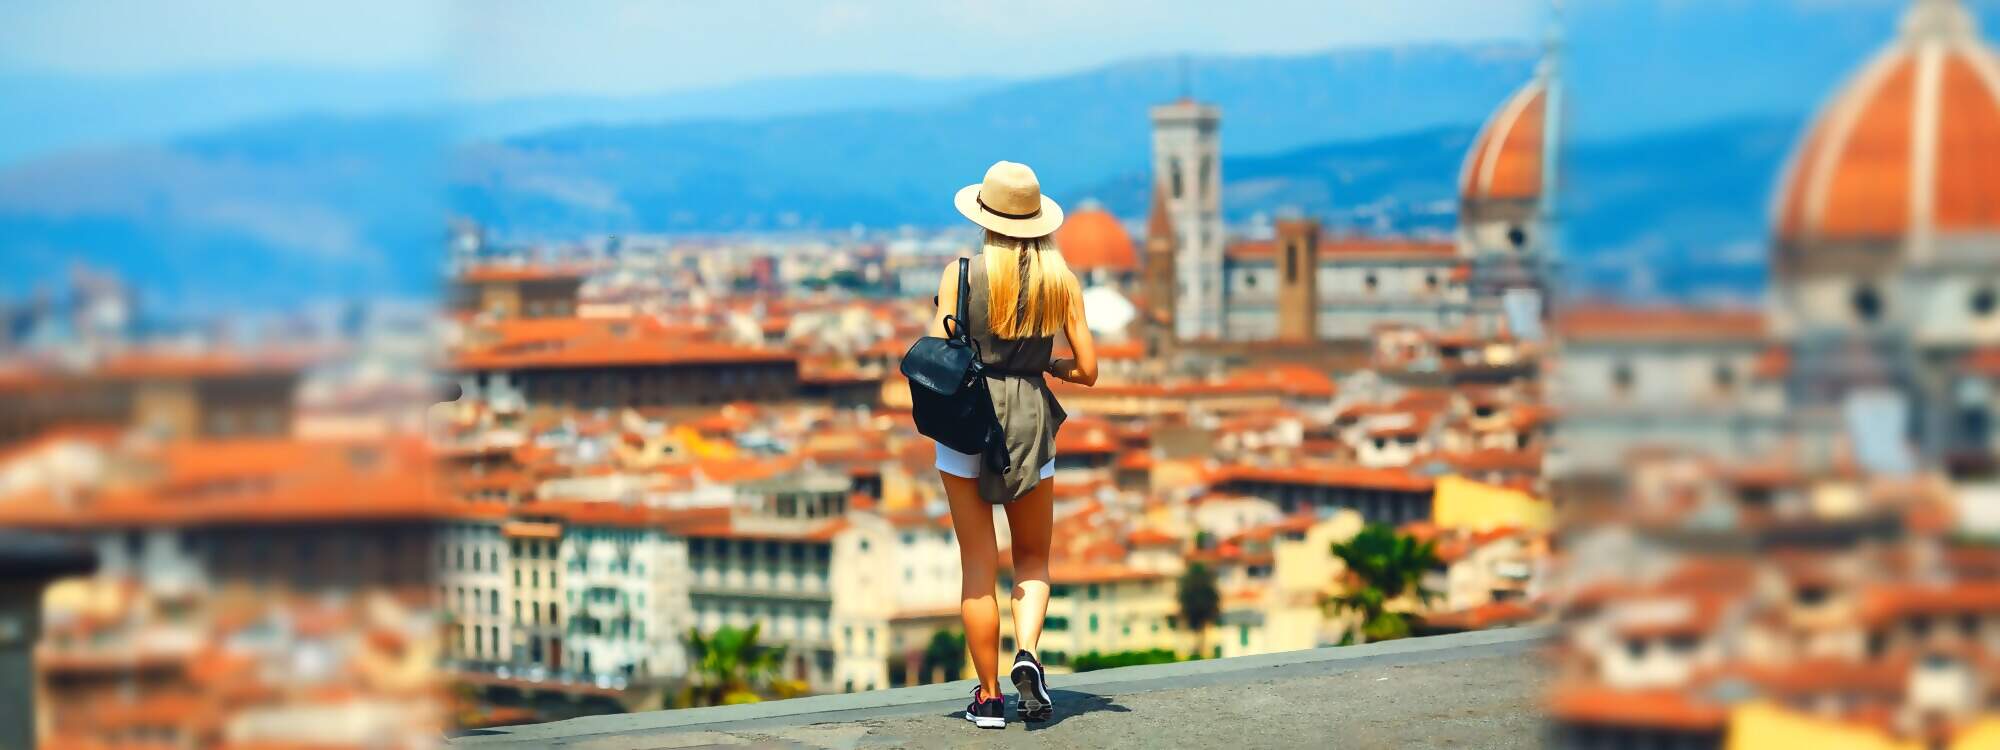 Sightseeing - Spaziergang - Florenz